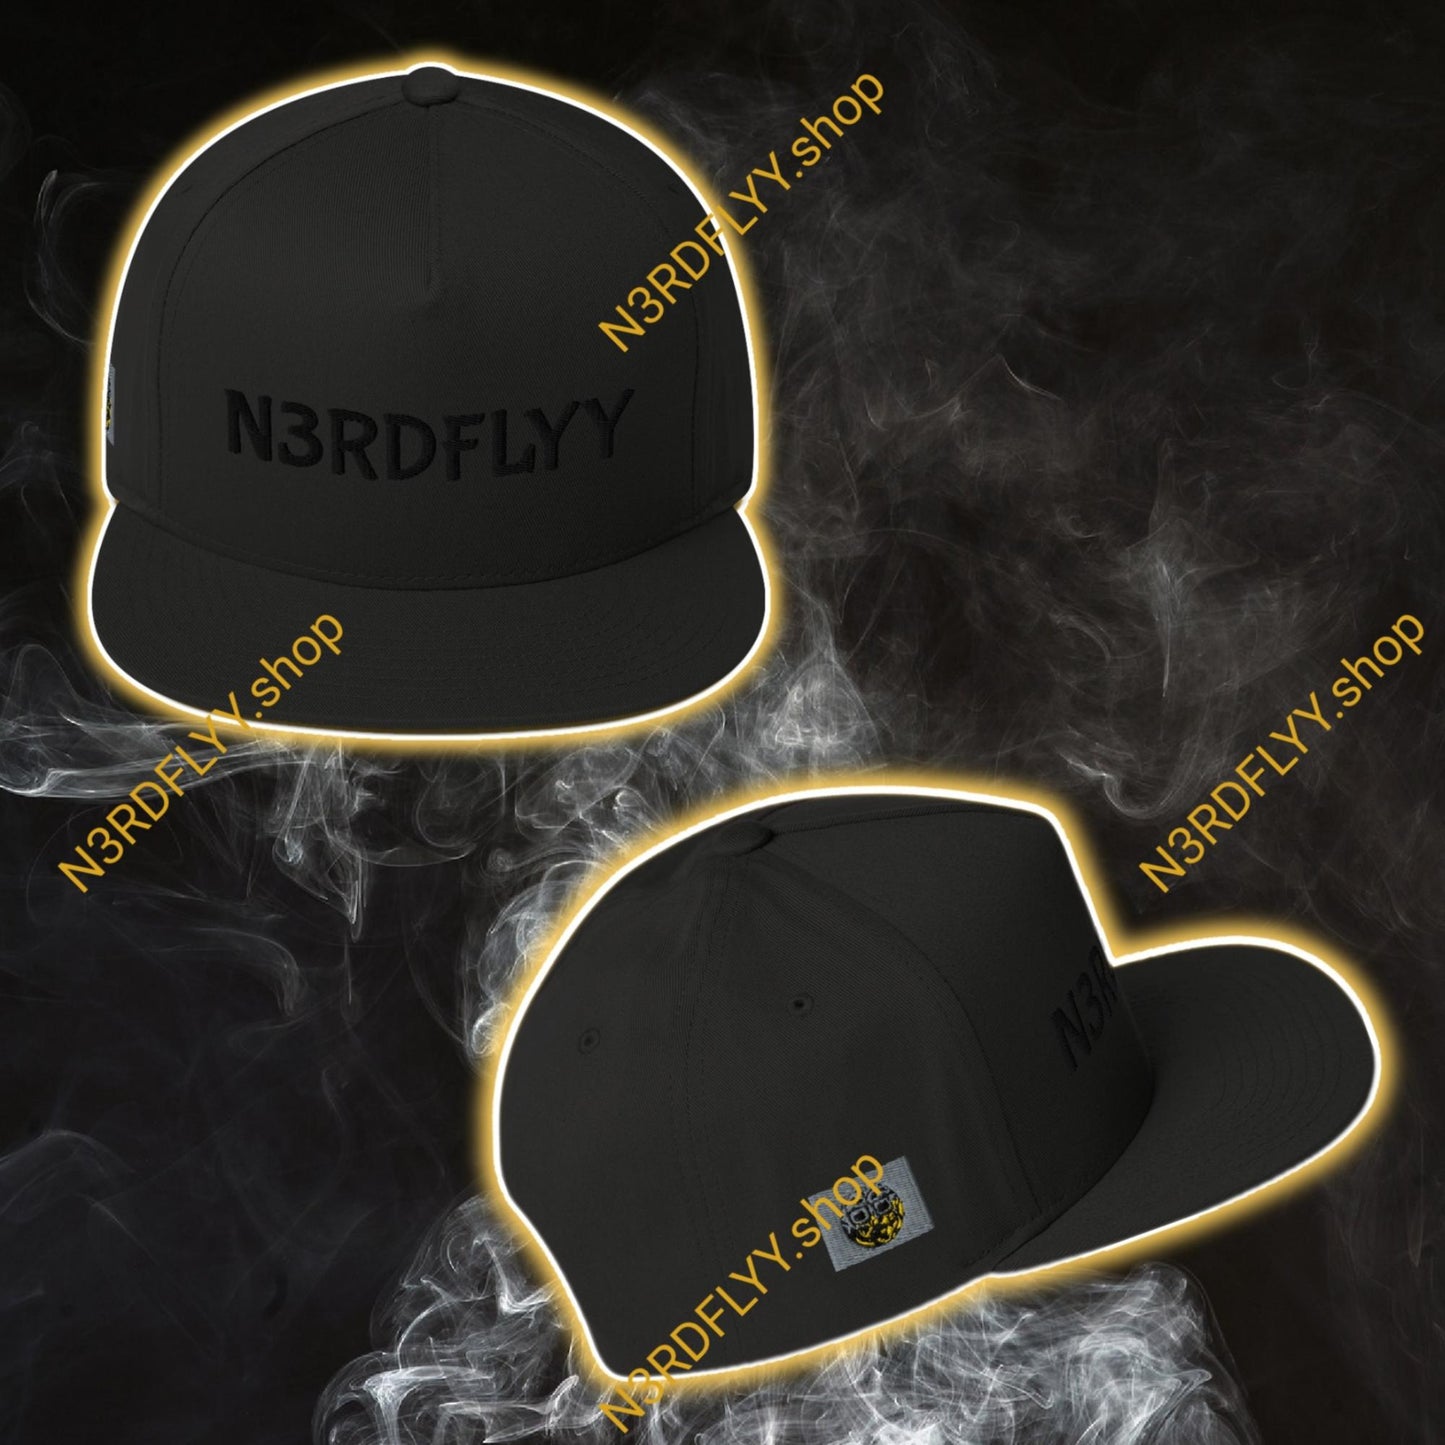 N3rdFLyy Originalz (Super Black) Snapback